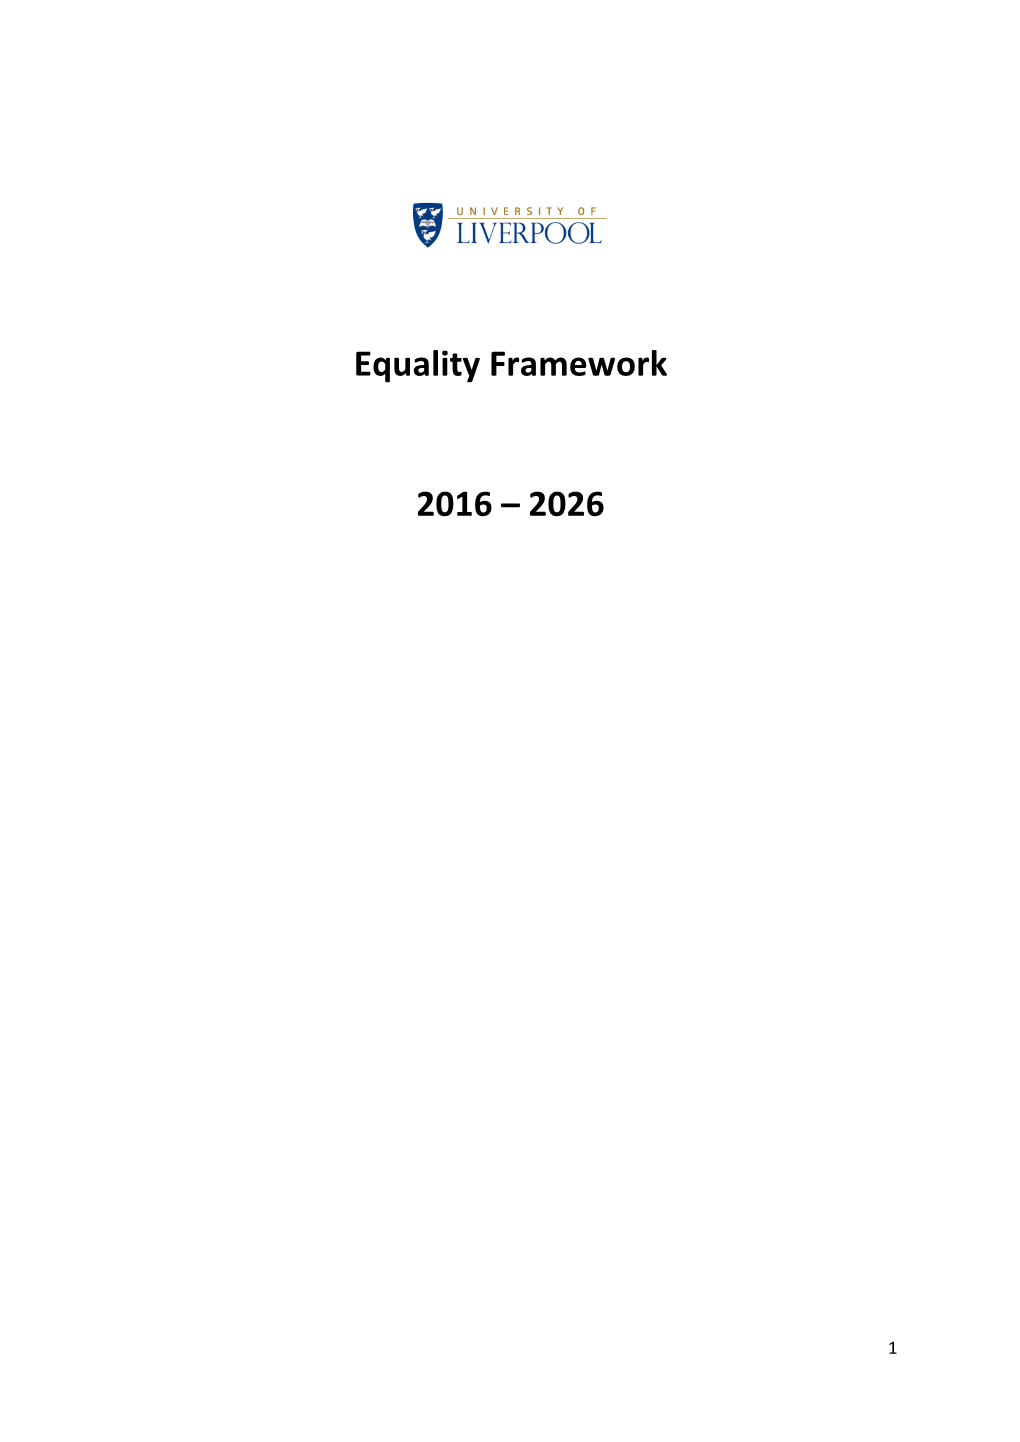 Equality Framework 2016-2026